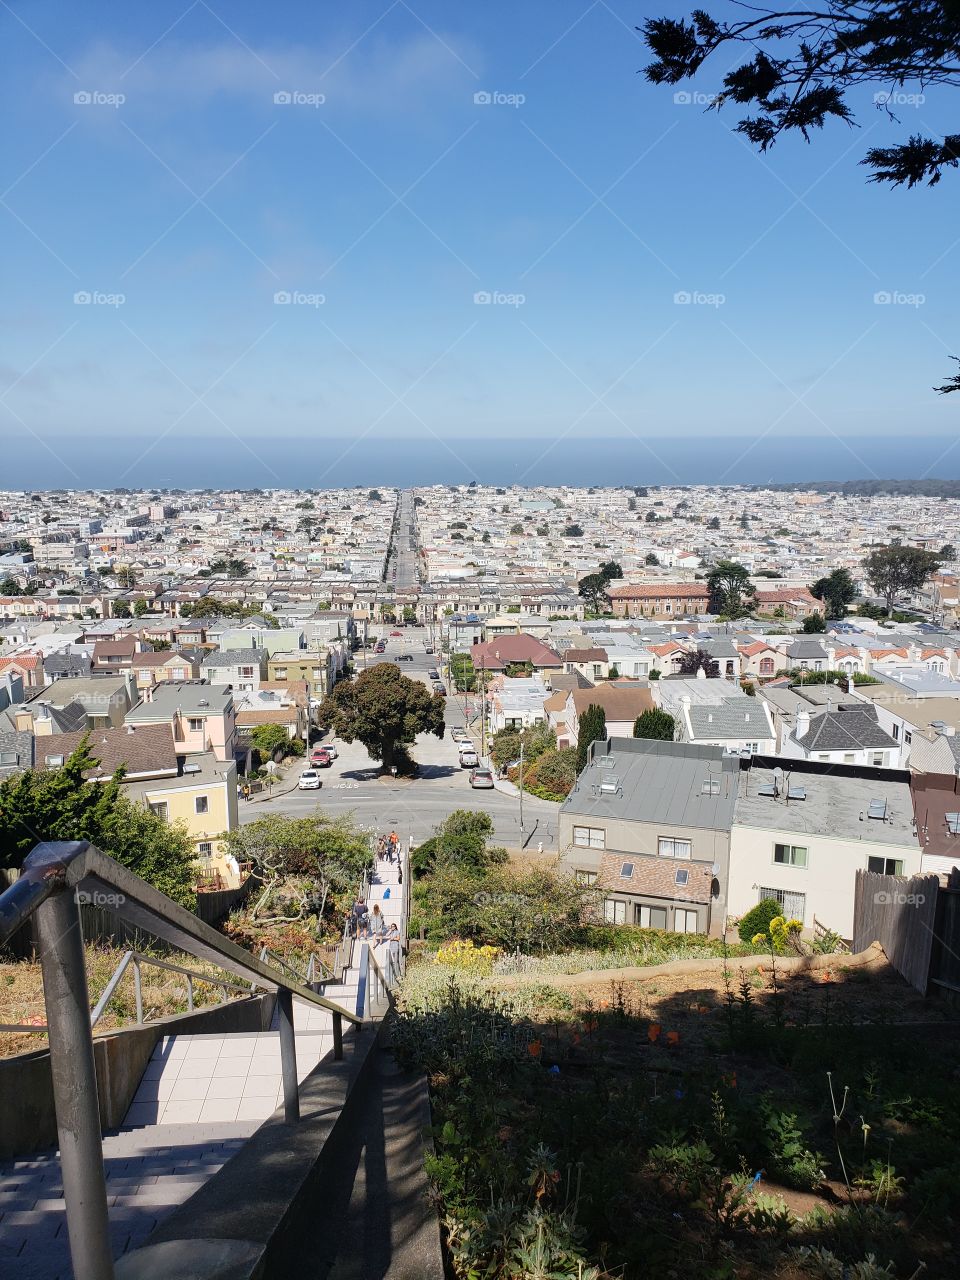 Sunny San Francisco neighborhood near painted stairs looking toward the blue San Francisco bay.